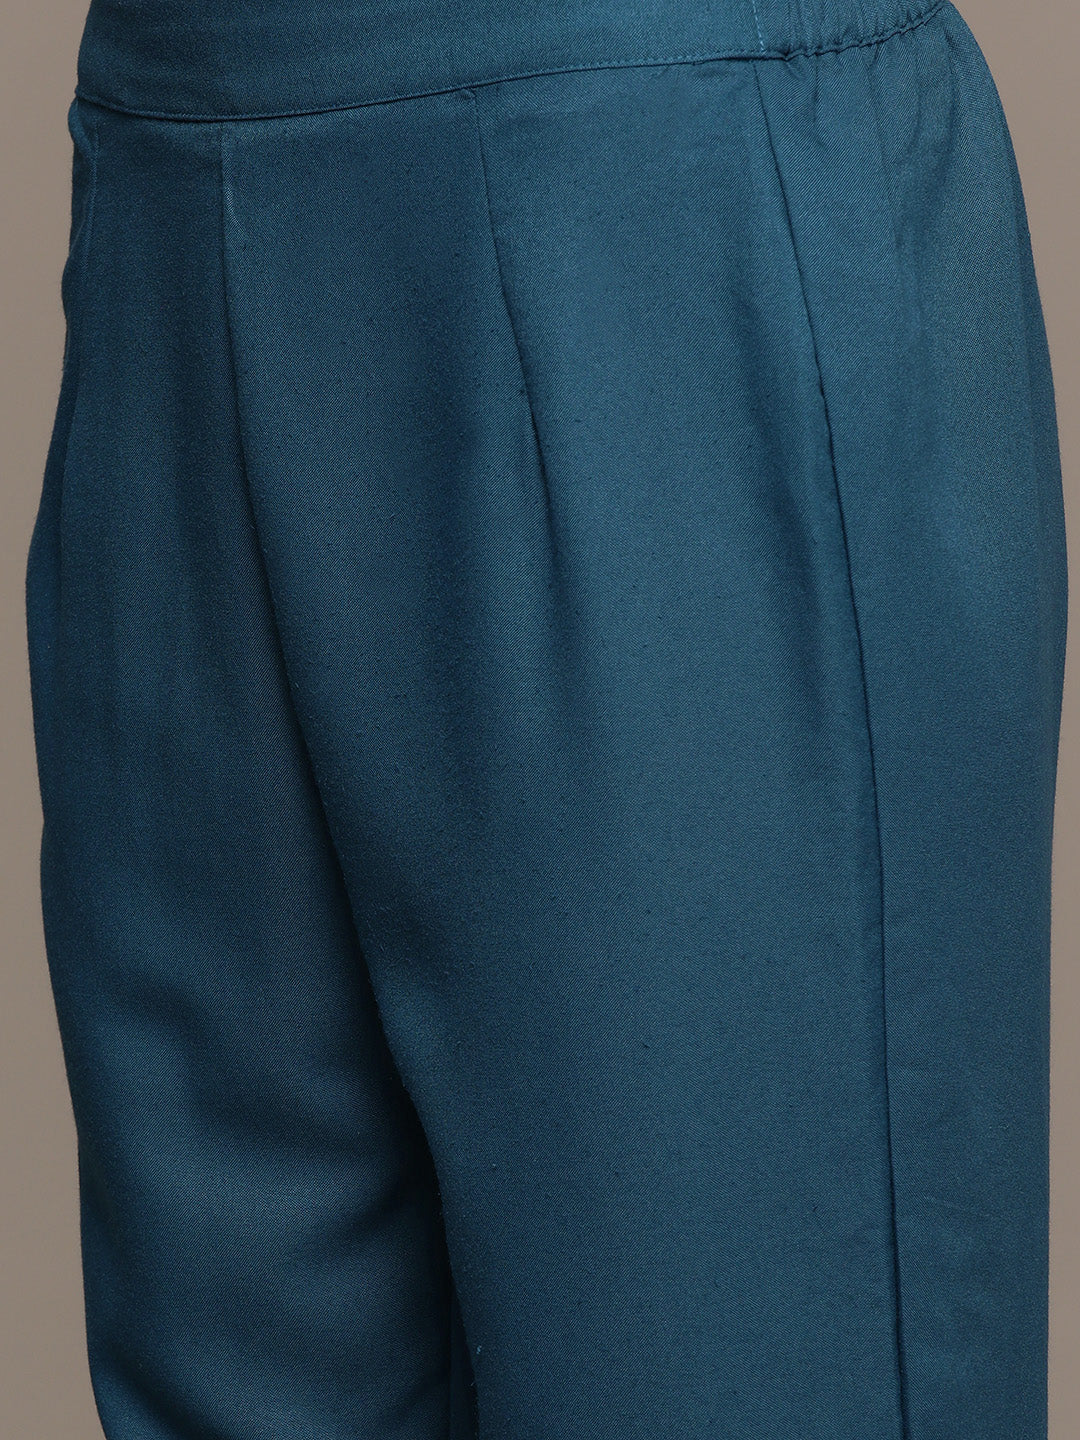 Women's Teal Blue Rayon Kurta, Pant And Dupatta Set - Ziyaa